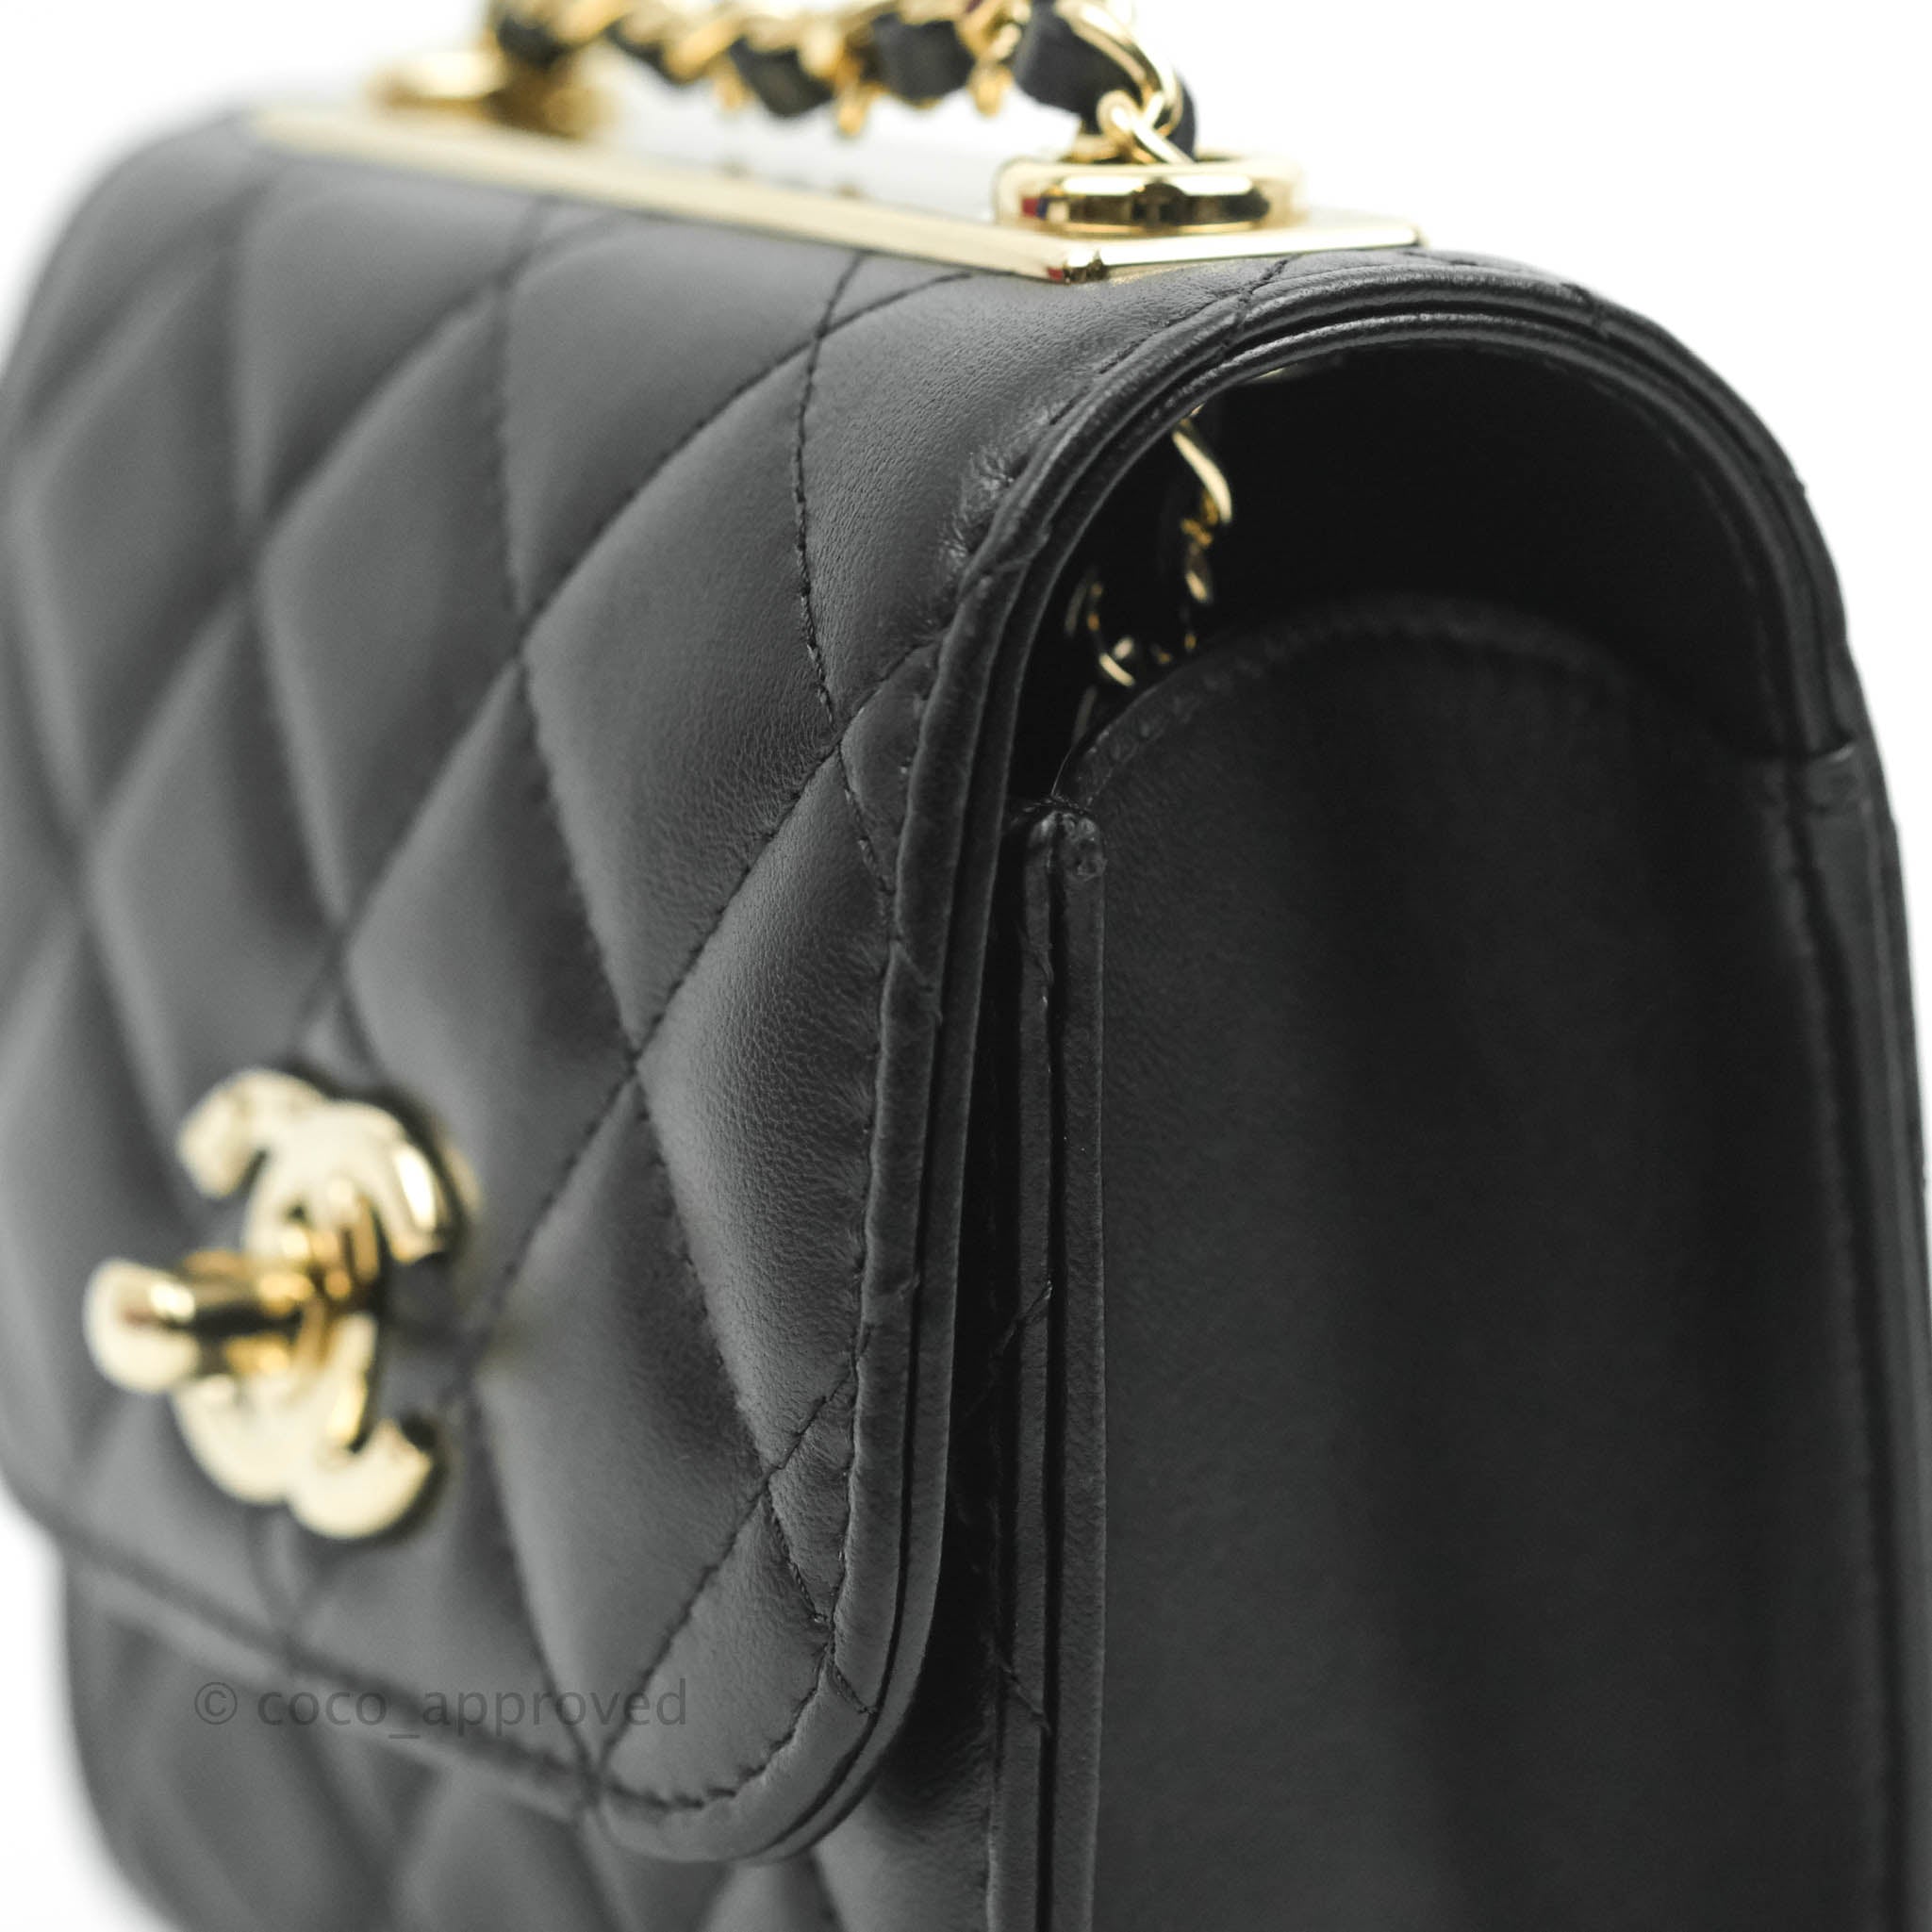 chanel black and gold handbag womens